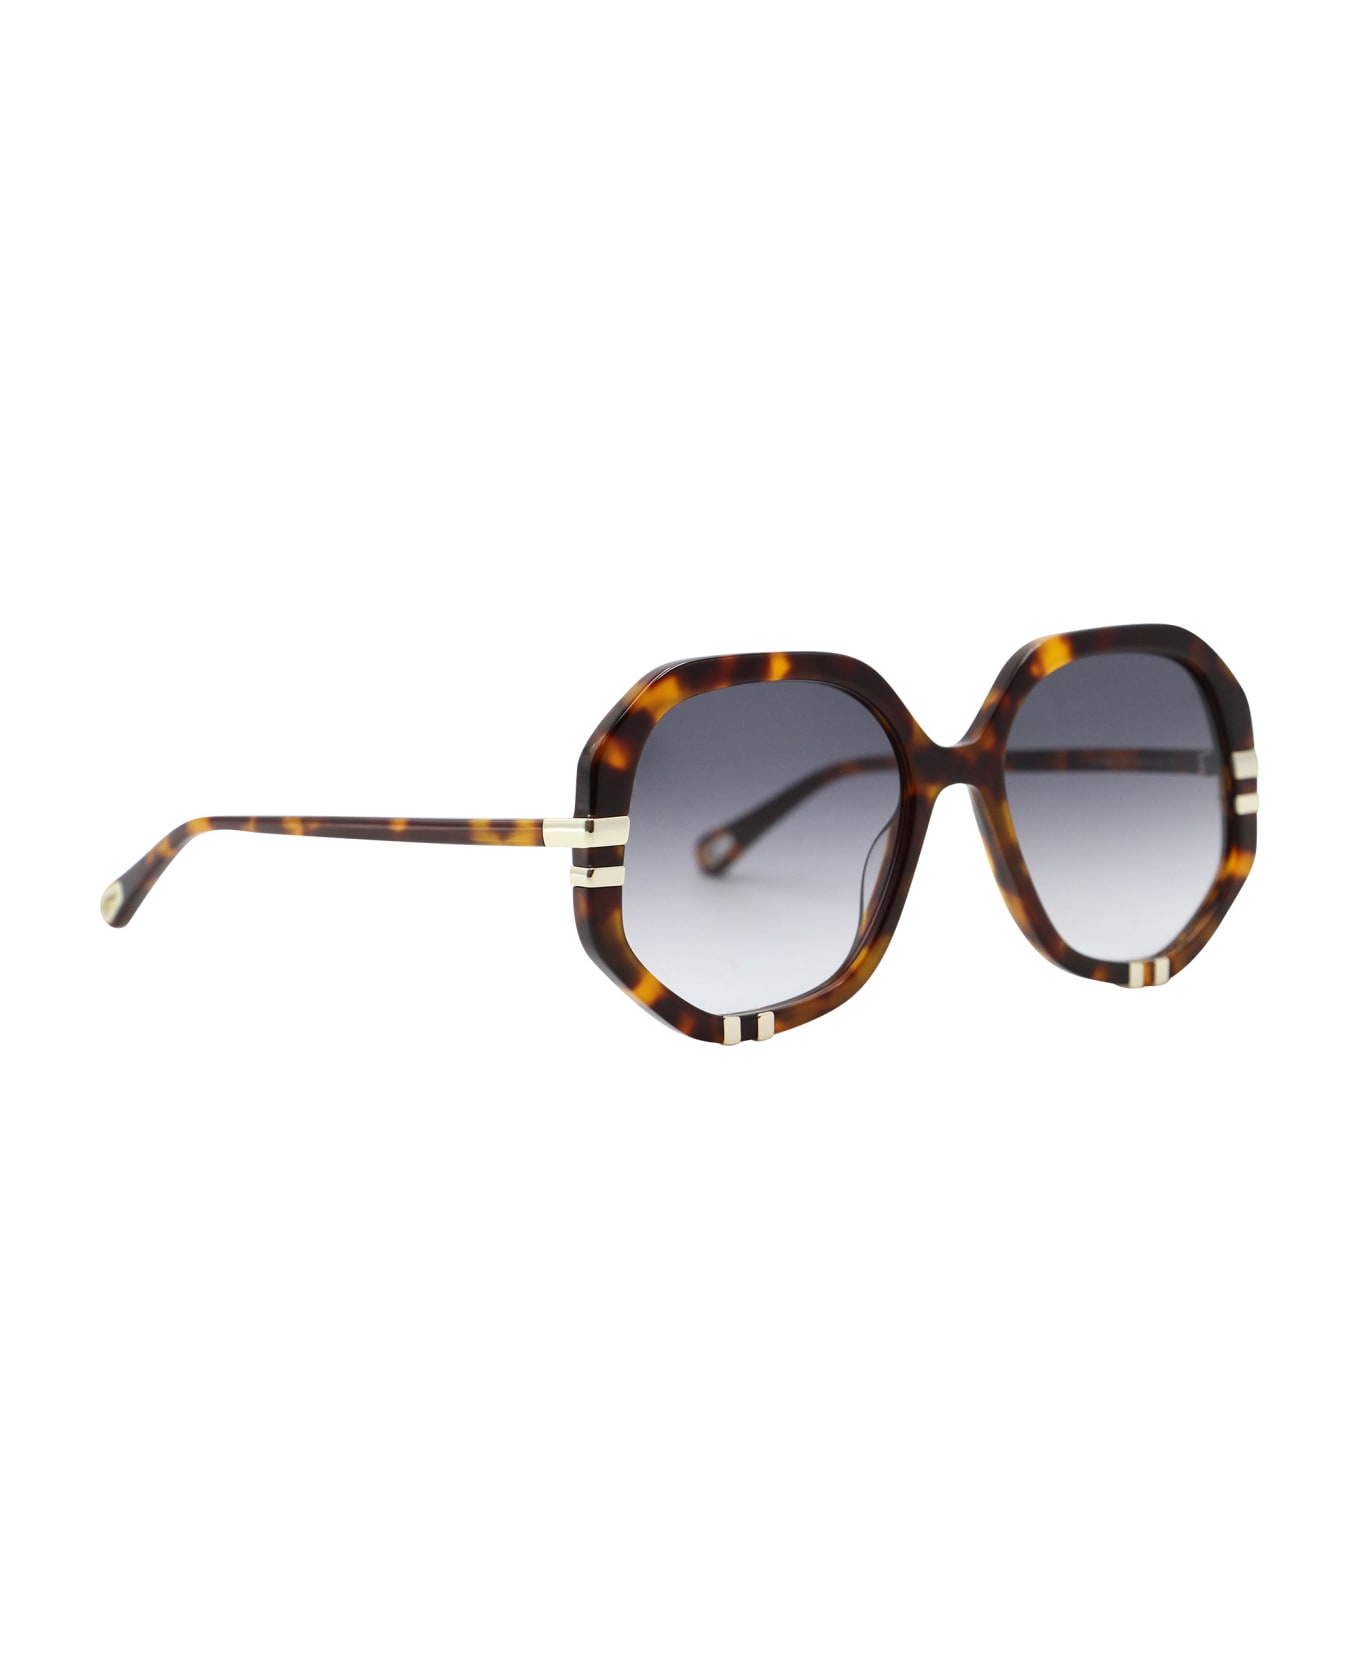 Chloé Squared Sunglasses - brown